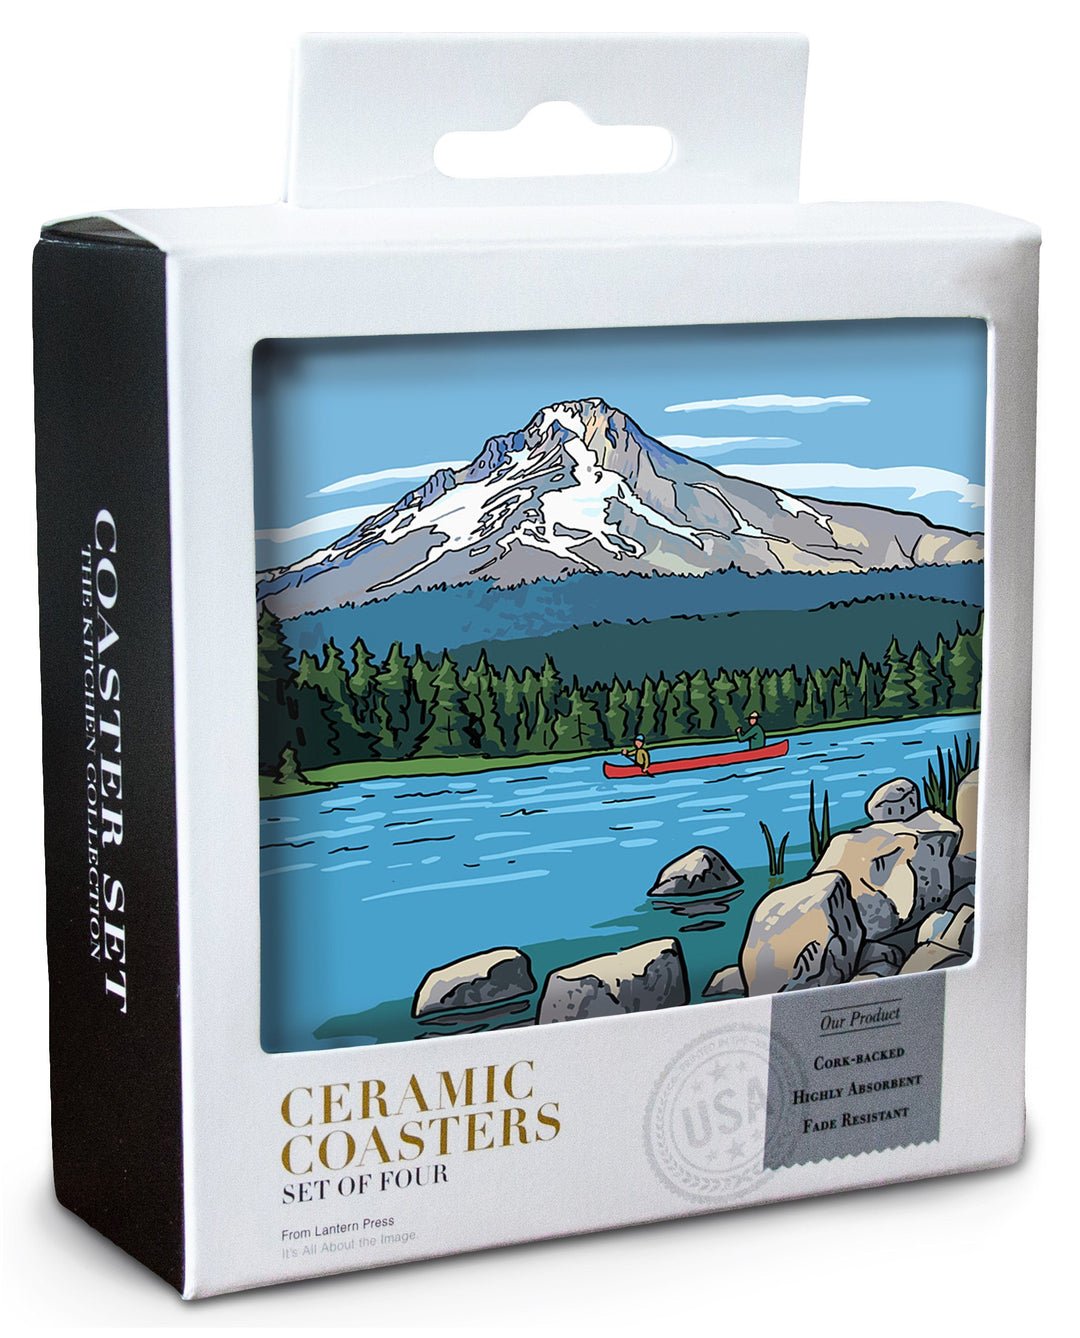 Mount Hood, Oregon, River & Mountain, Line Drawing, Lantern Press Artwork, Coaster Set Coasters Lantern Press 